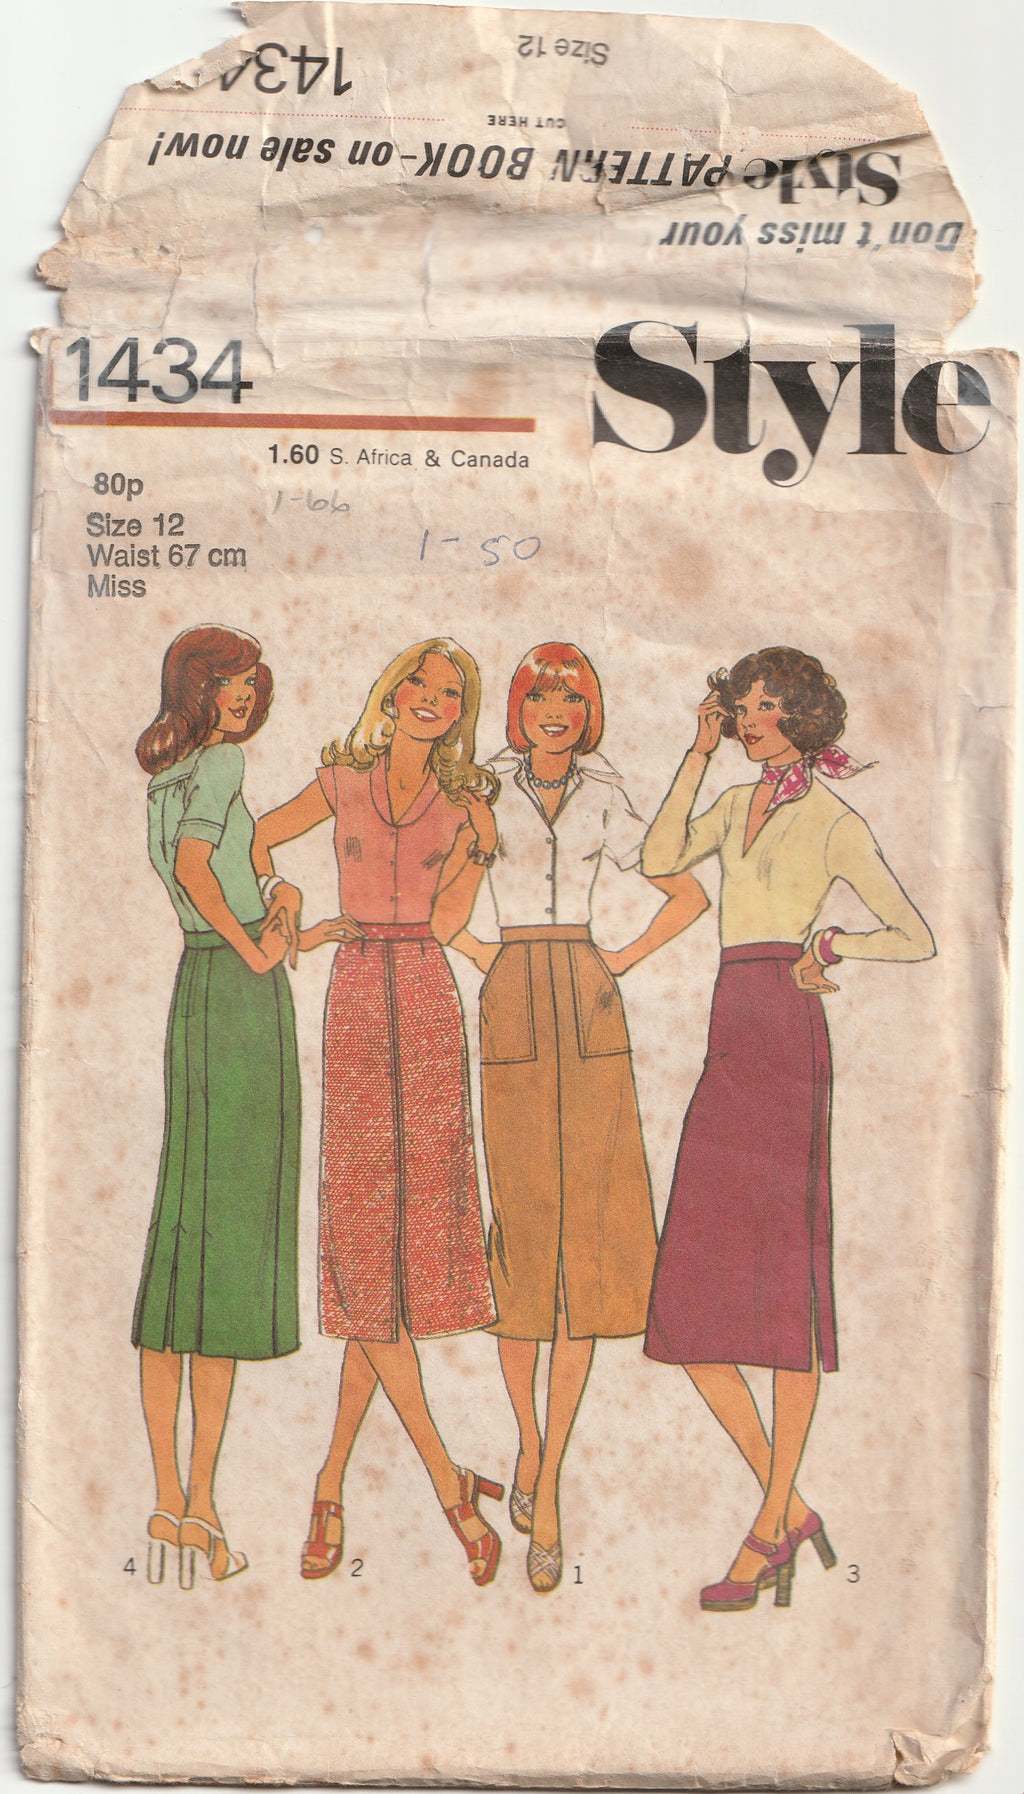 Vintage pattern straight skirt style 1434 1976 waist 67 cm